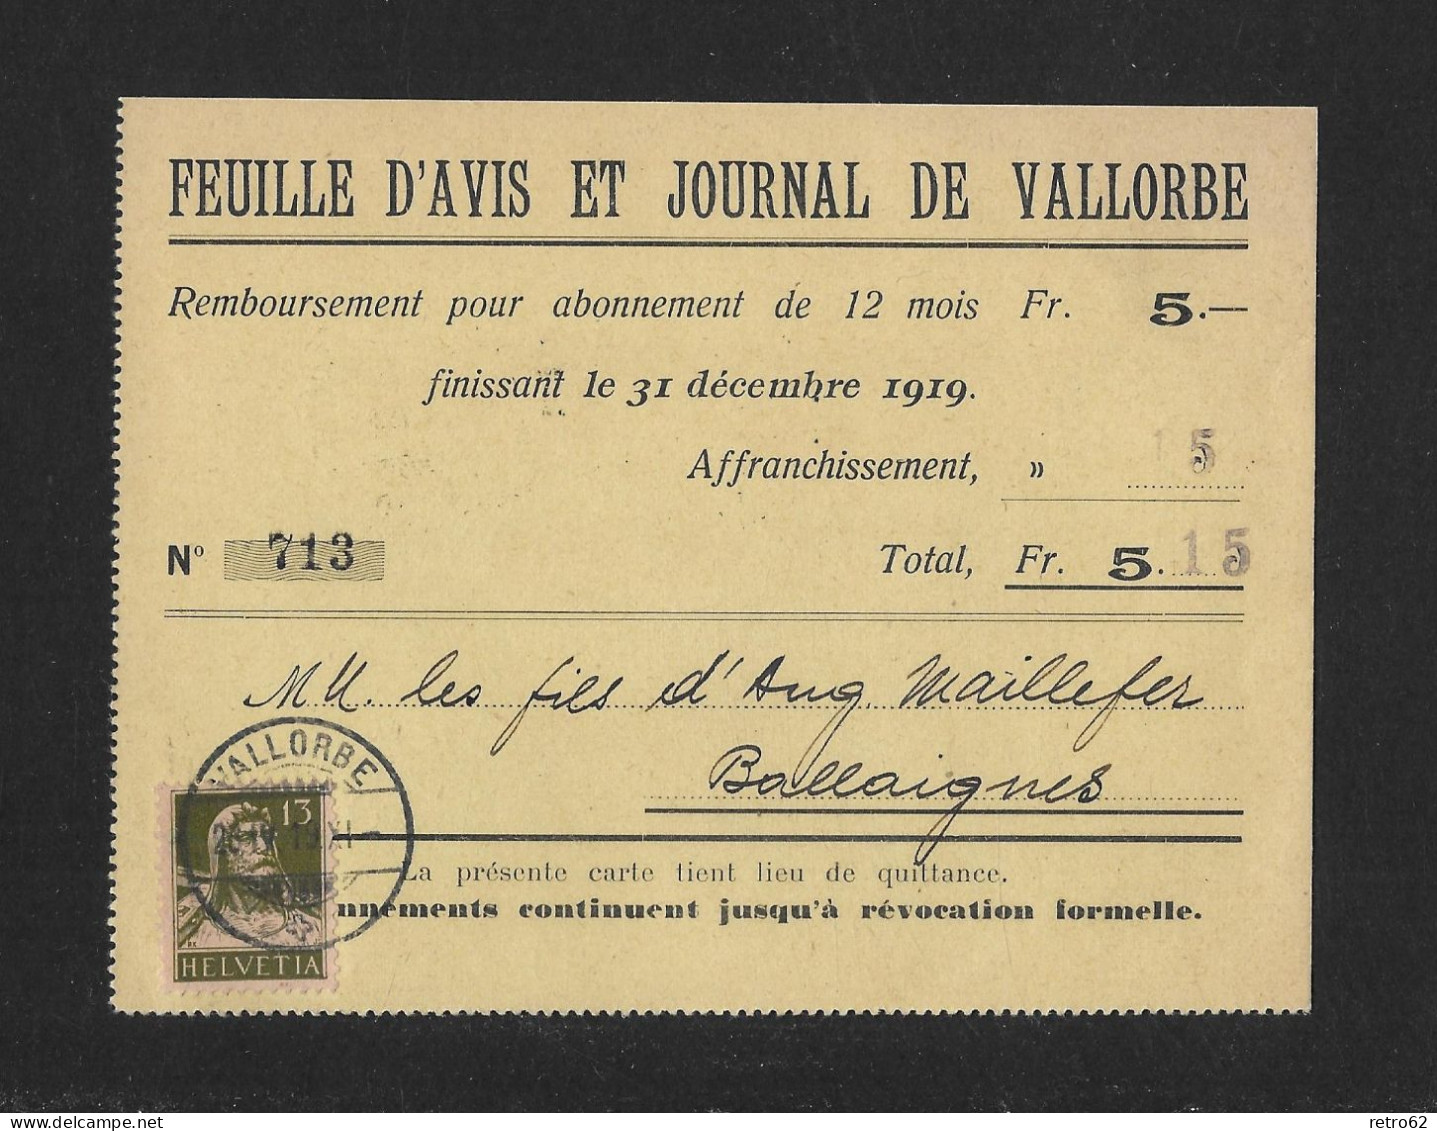 1919 REMBOURSEMENT ► Feuille D'Avis Et Journal De Vallorbe" Von Vallorbe Nach Ballaigues - Covers & Documents